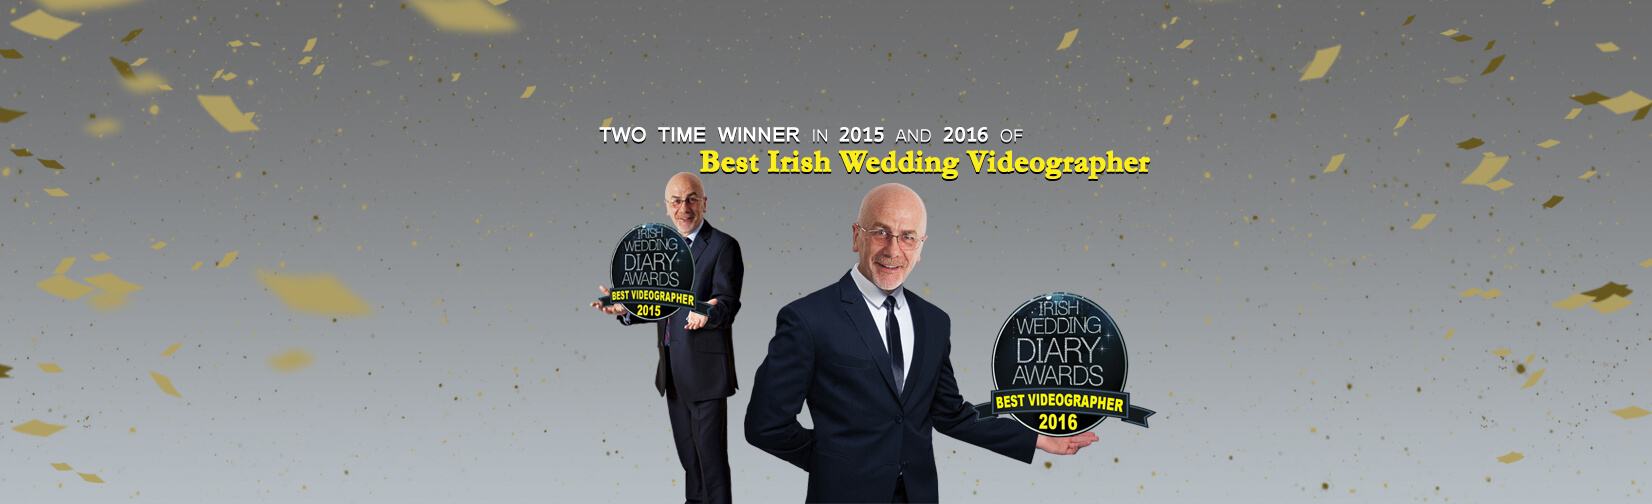 Winner of the BEST Videographer in Ireland